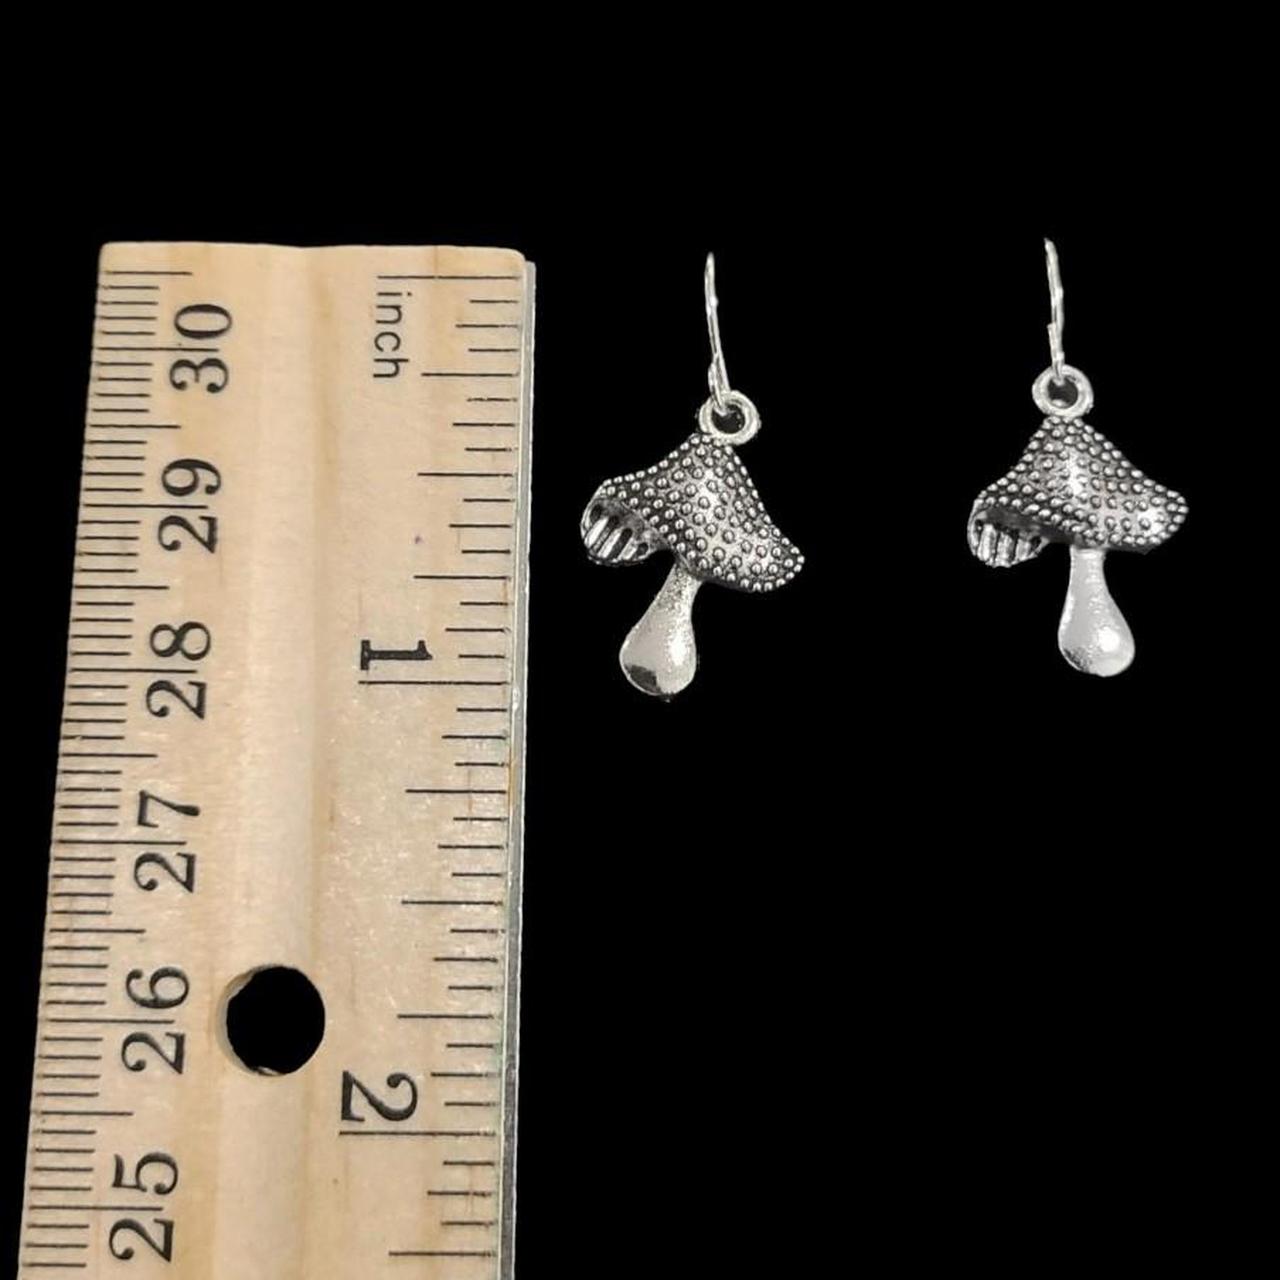 Product Image 3 - Silver Mushroom Earrings 003
..
Small Silver-tone